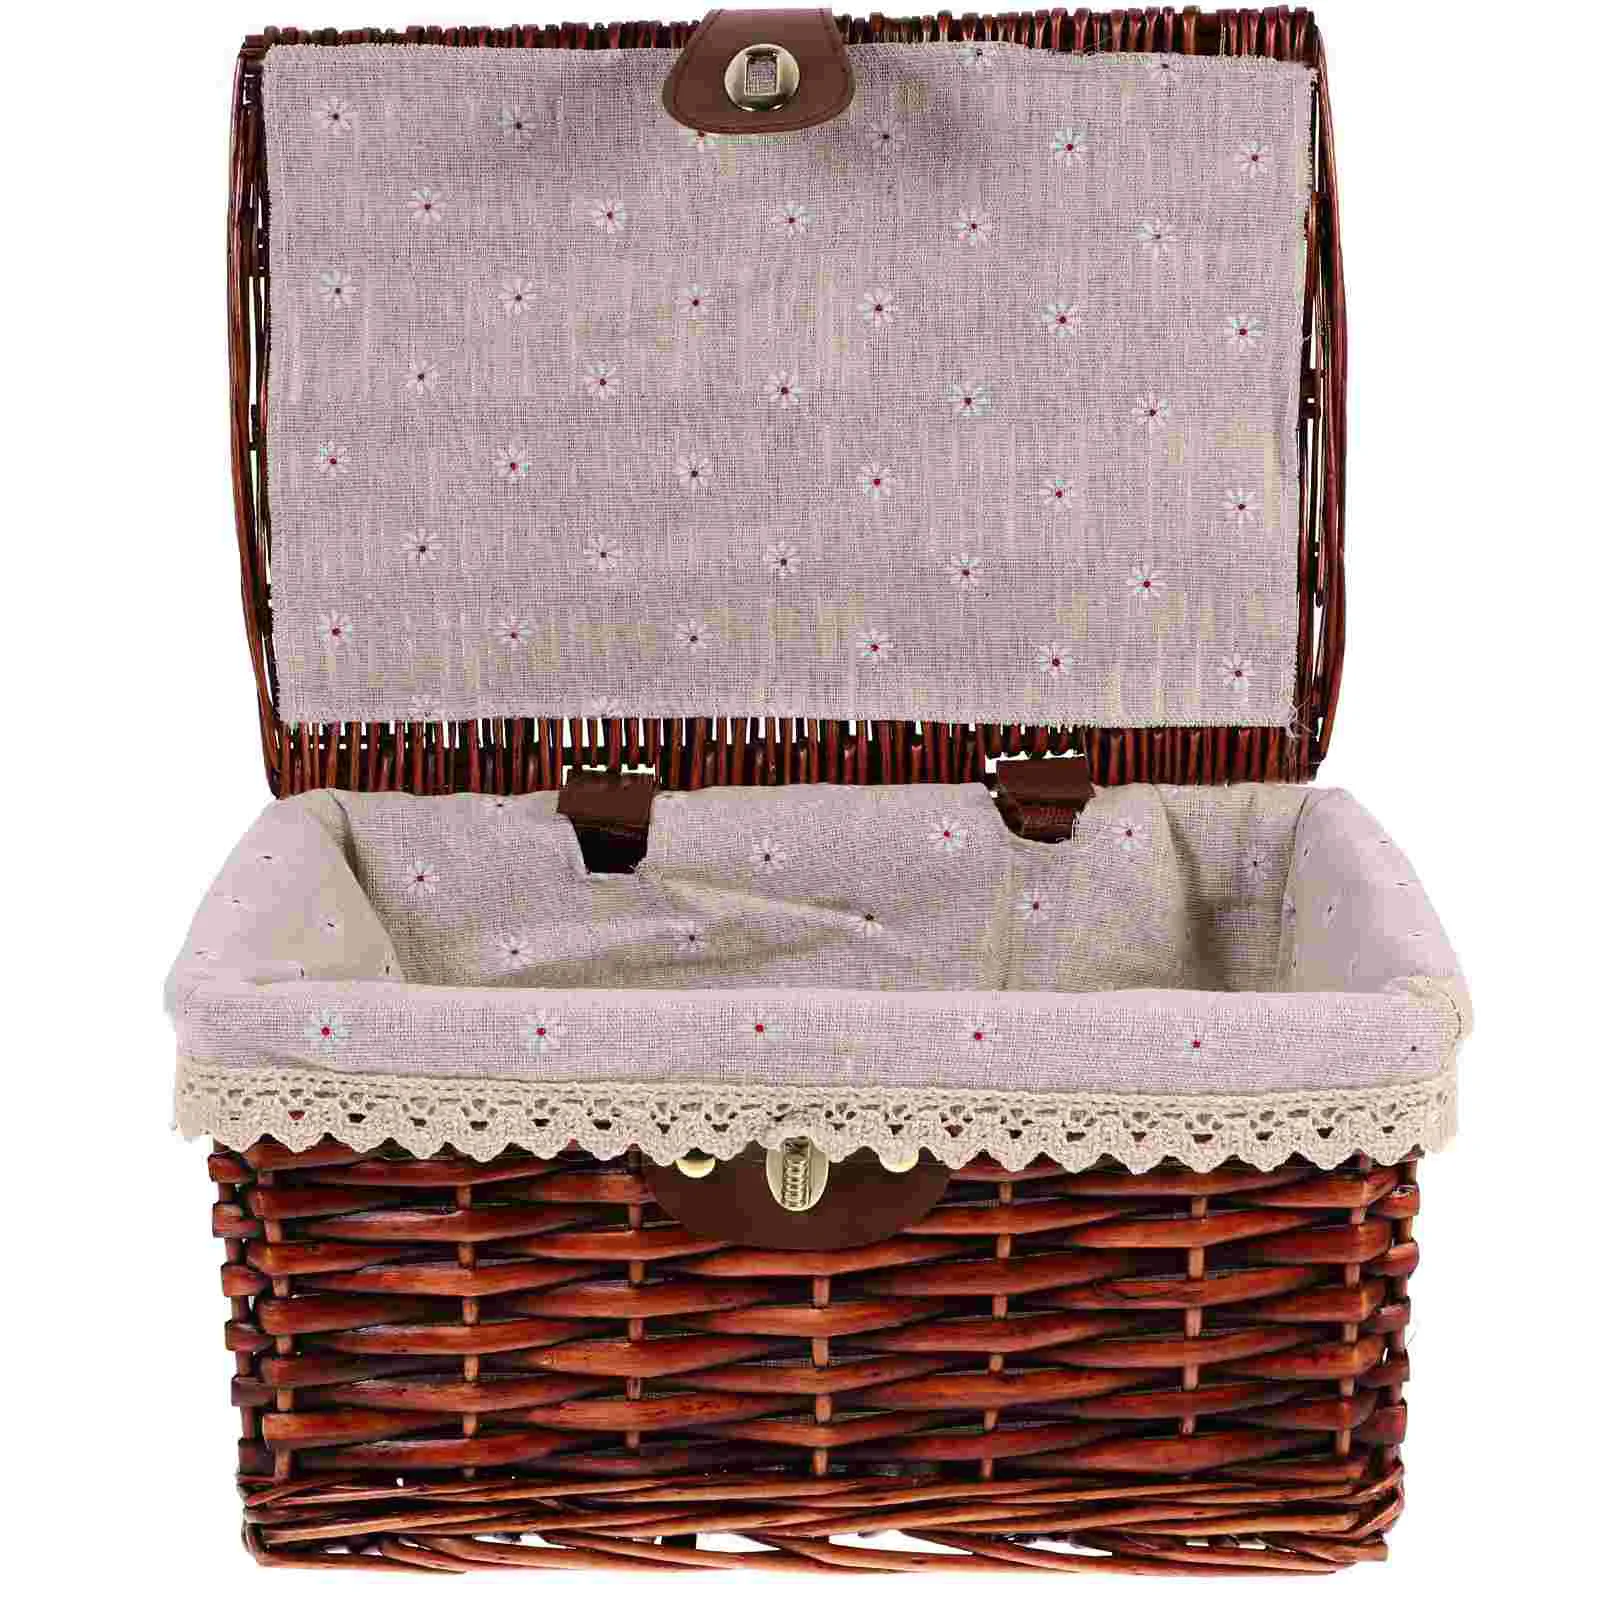 Wicker Storage Basket With Lid Rectangular Rattan Bins Lid Liner Seagrass Shelf Makeup Organizer